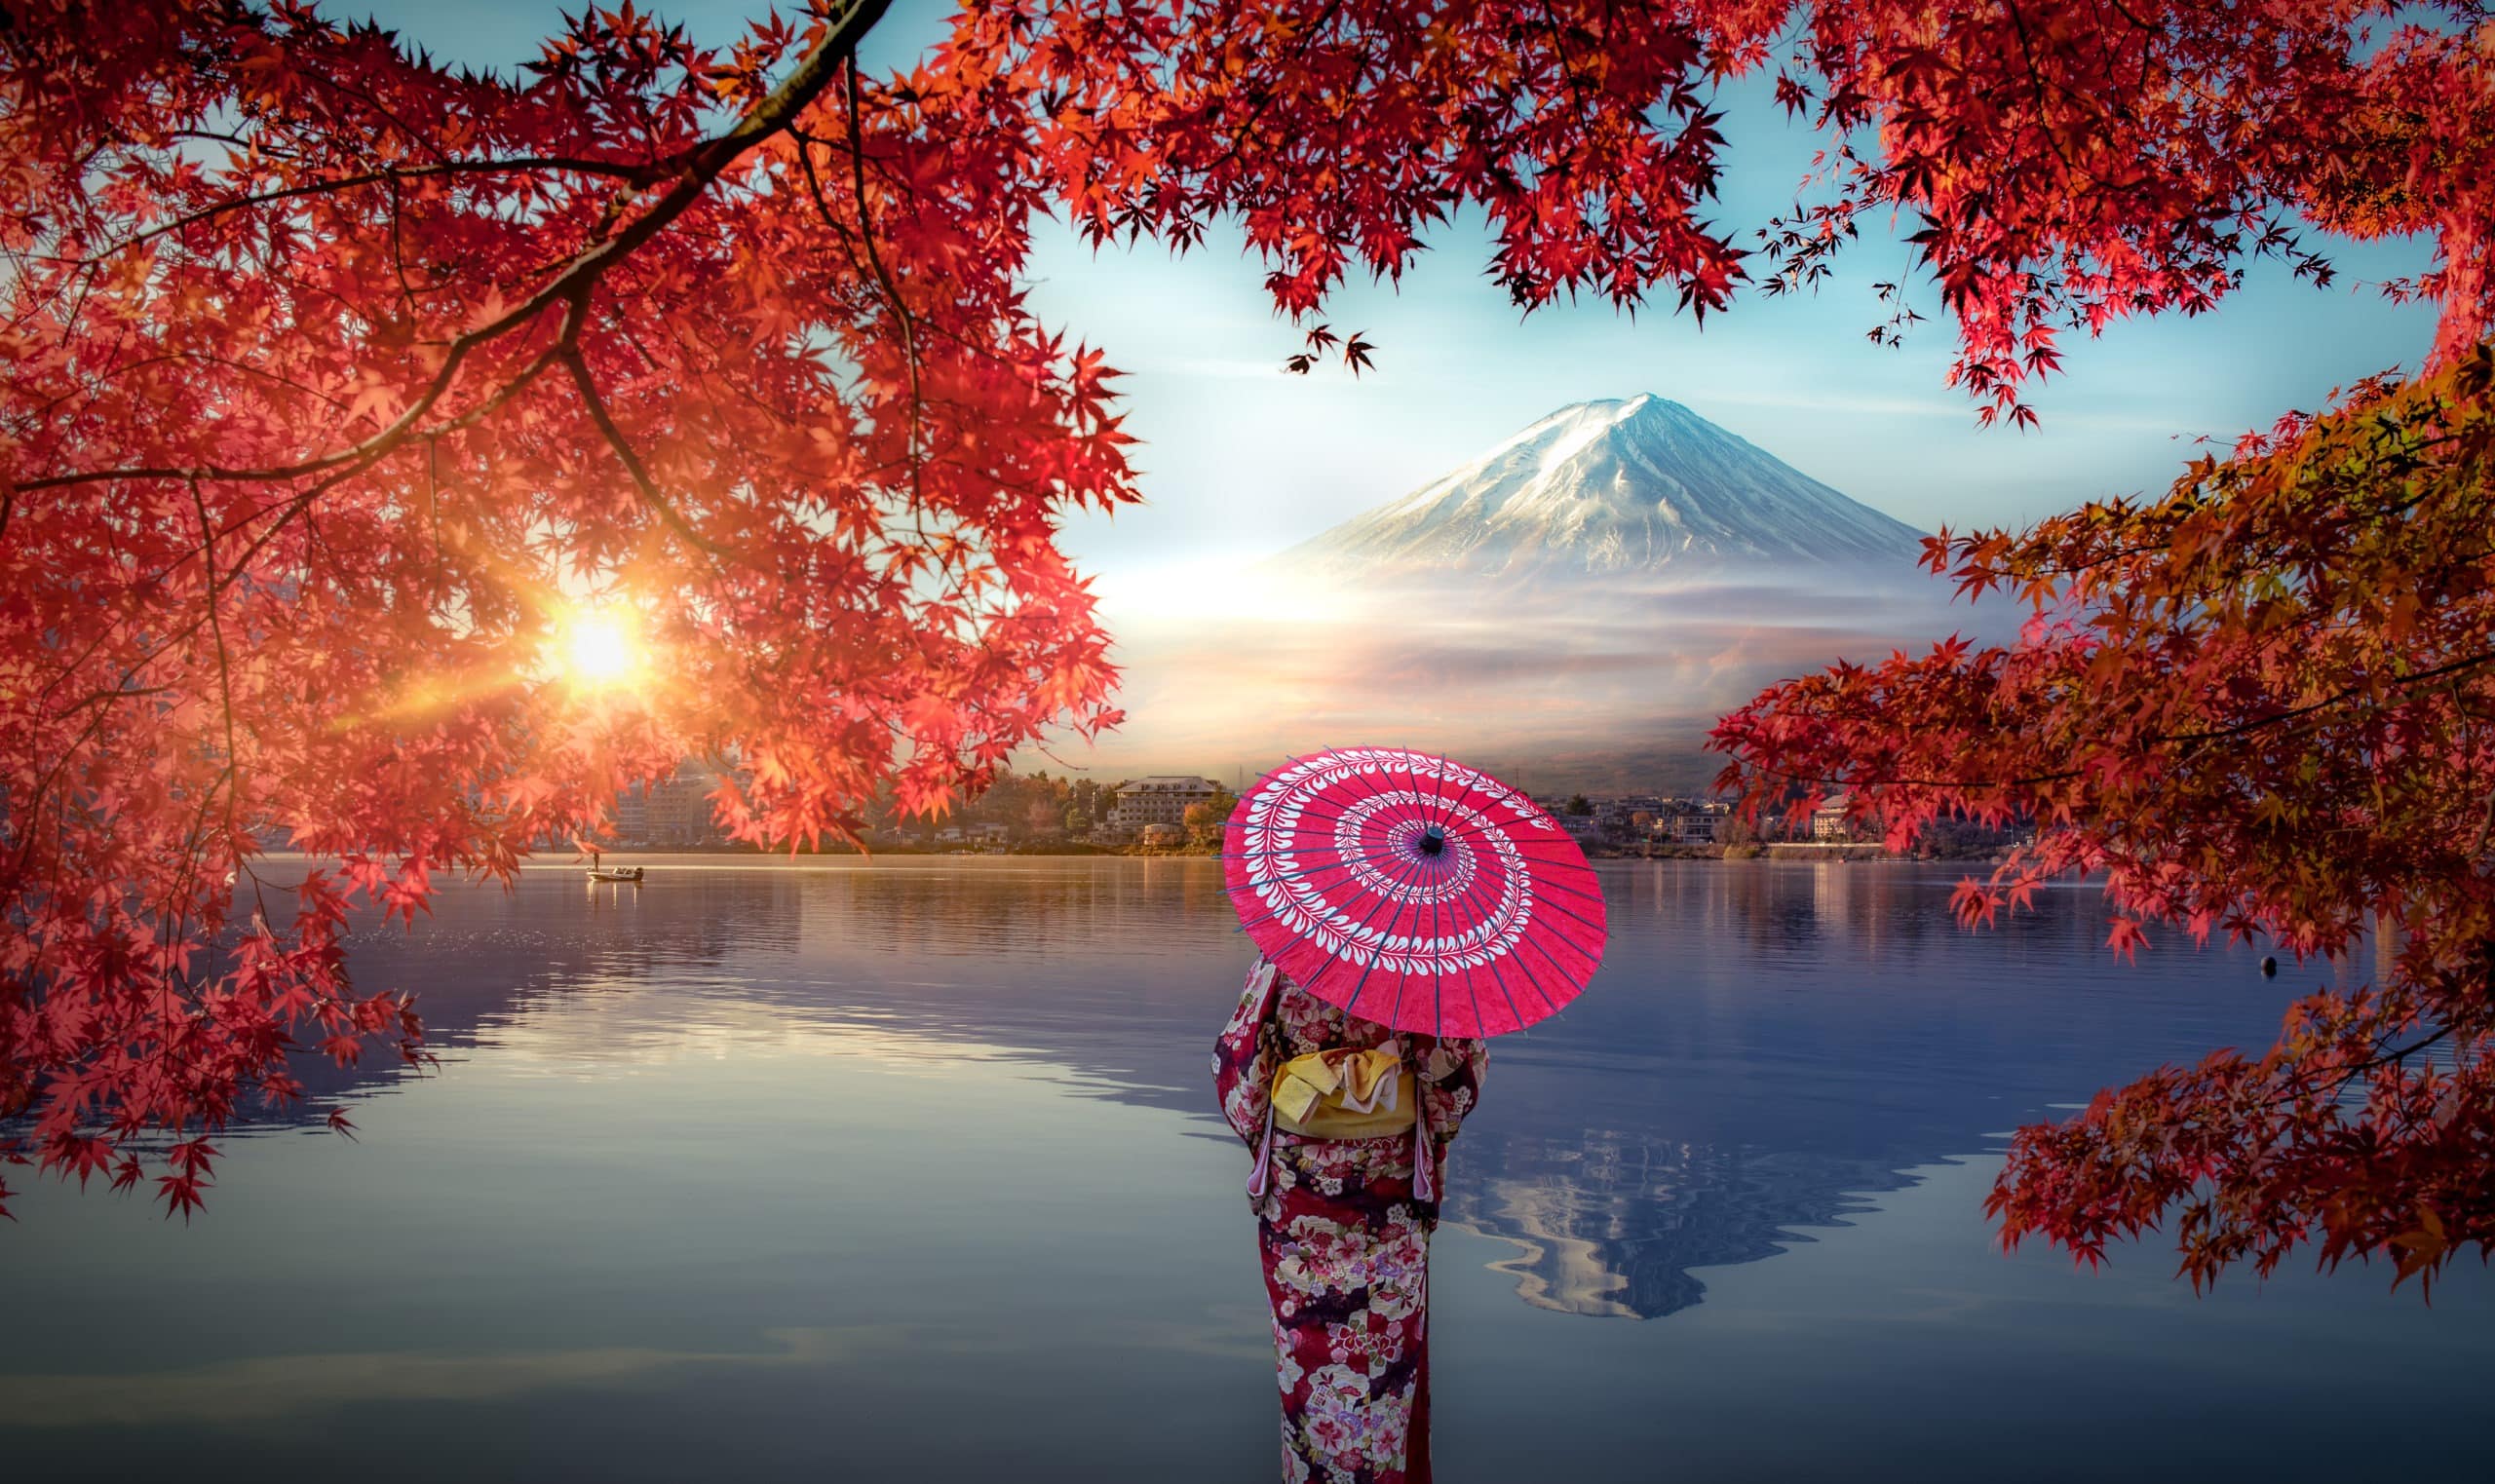 Colorful autumn Sseason and Mountain Fuji with Asian woman wearing traditional kimono.